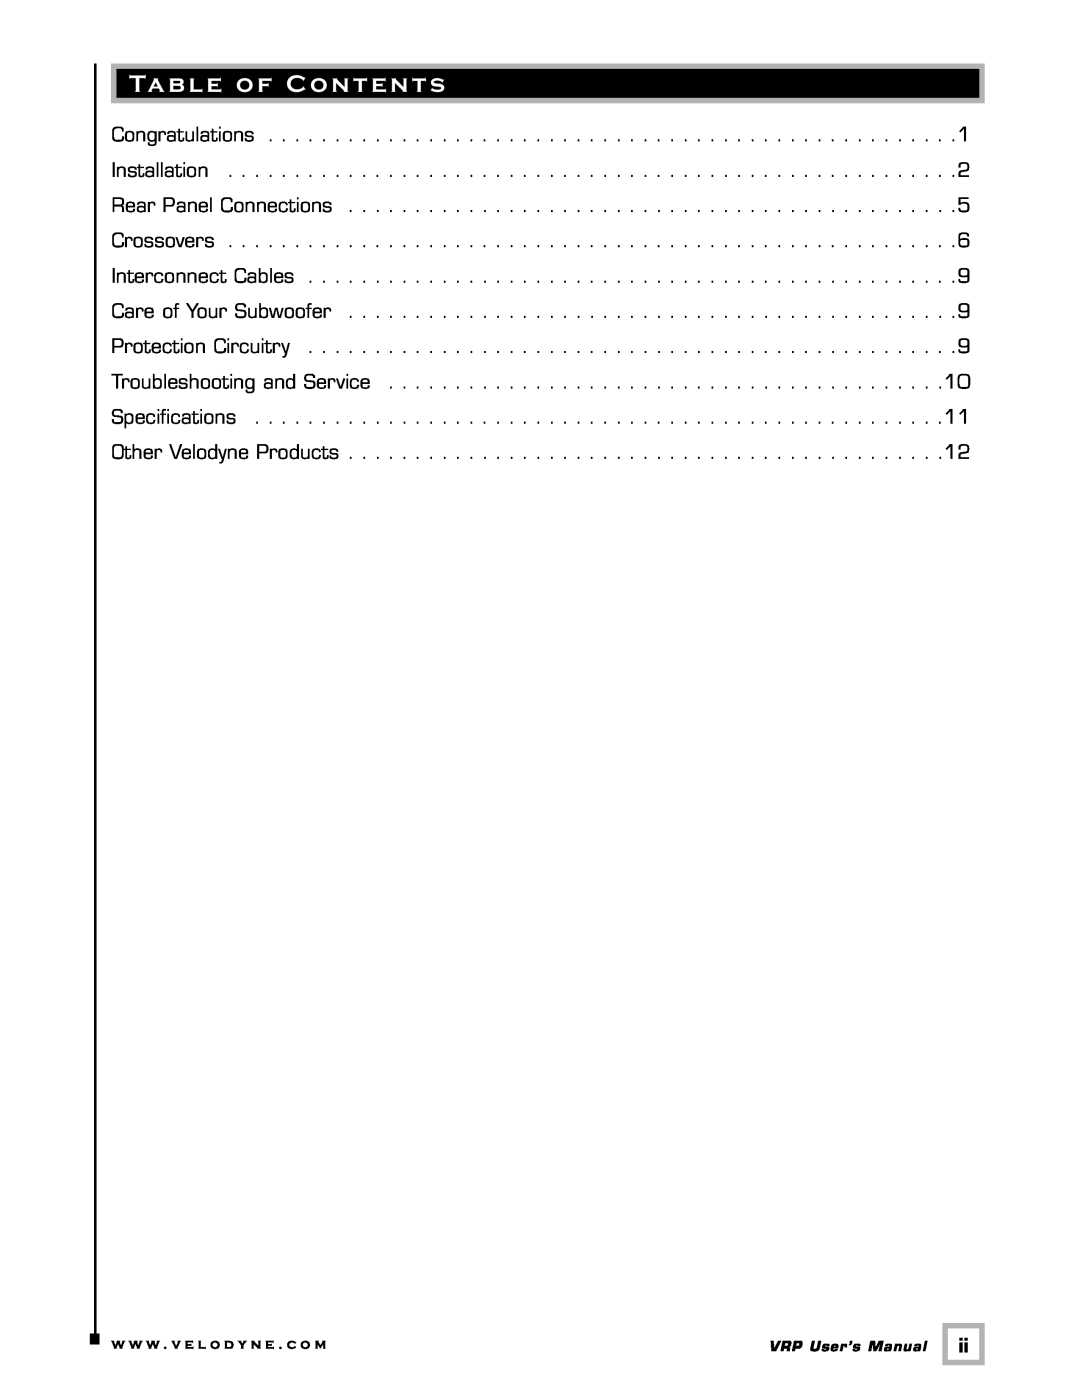 Velodyne Acoustics VRP Series user manual Table of Contents, w w w . v e l o d y n e . c o m 